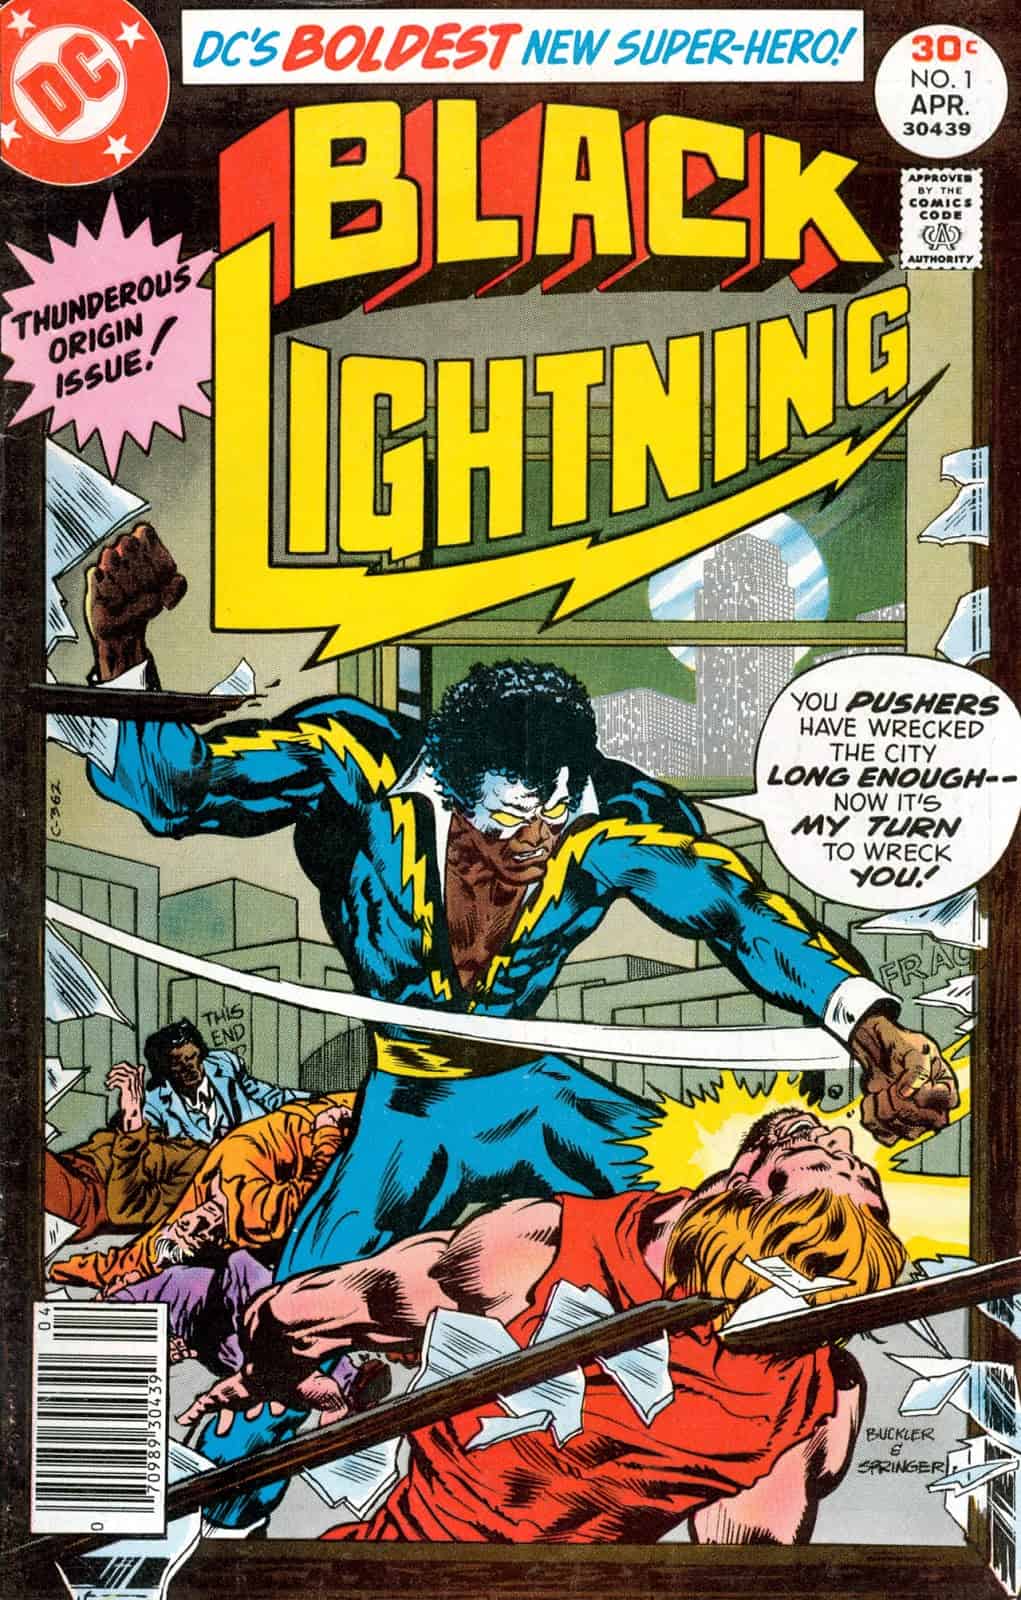 ANCIENT HISTORY 10: Black Lightning #1 (Classic Comic Review, April 1977) -  Comic Watch